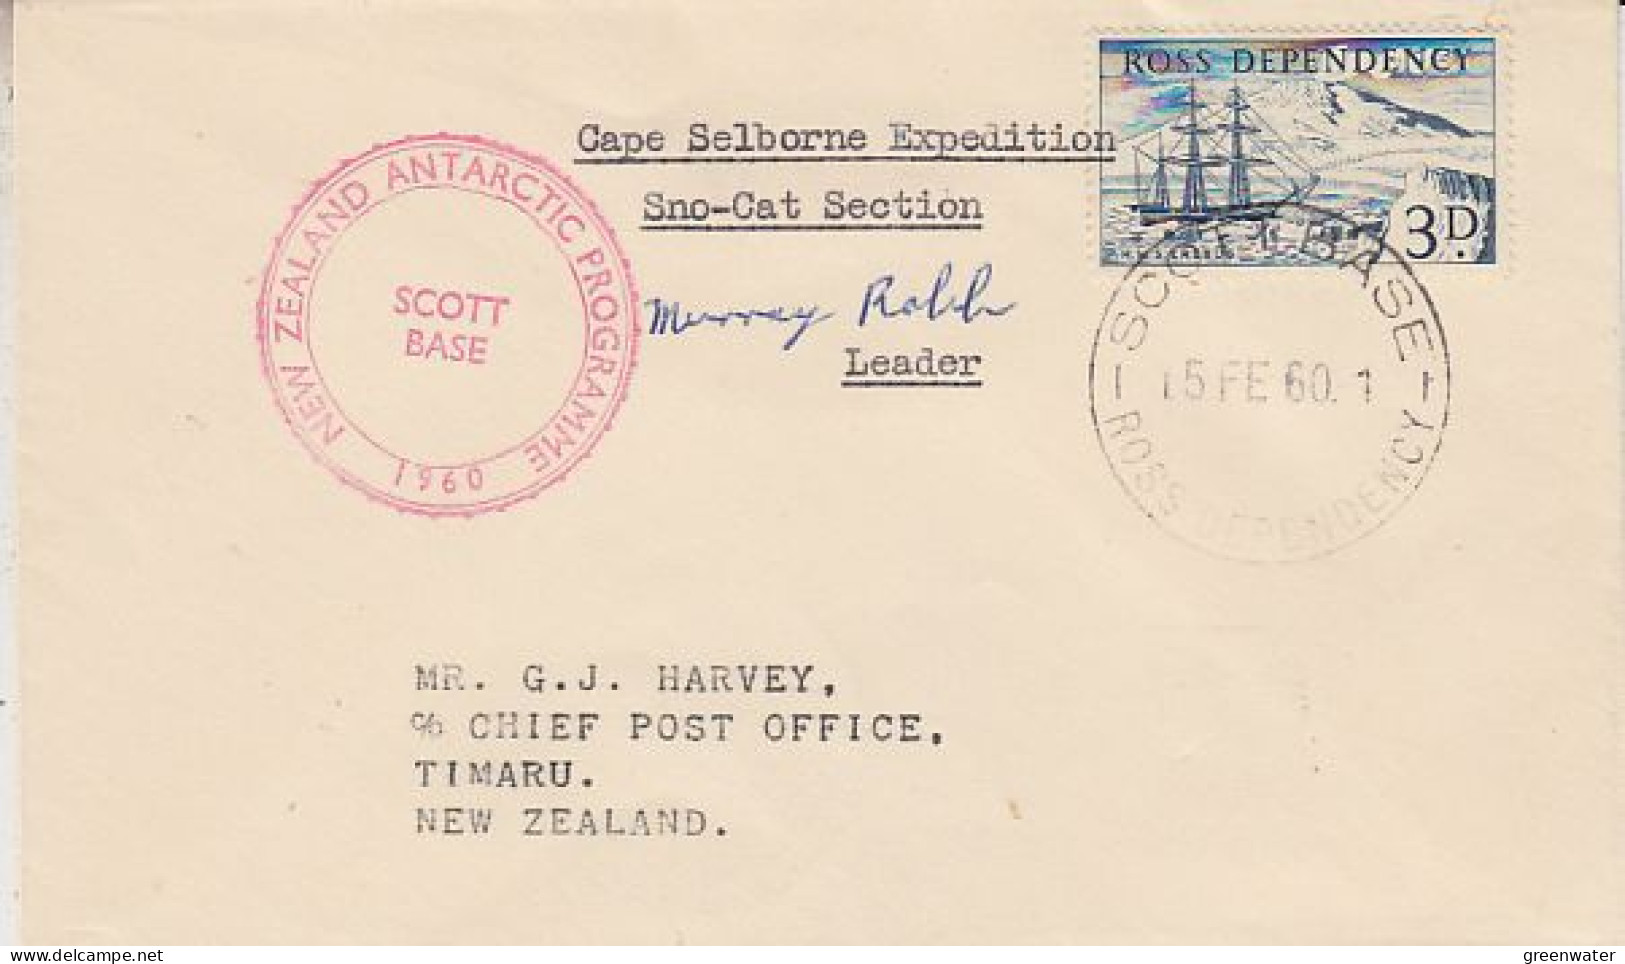 Ross Dependency Cape Selborne Expedition Sno-cat Section Signature Leader Ca Scott Base 15 FEB 1960 (RO188) - Briefe U. Dokumente